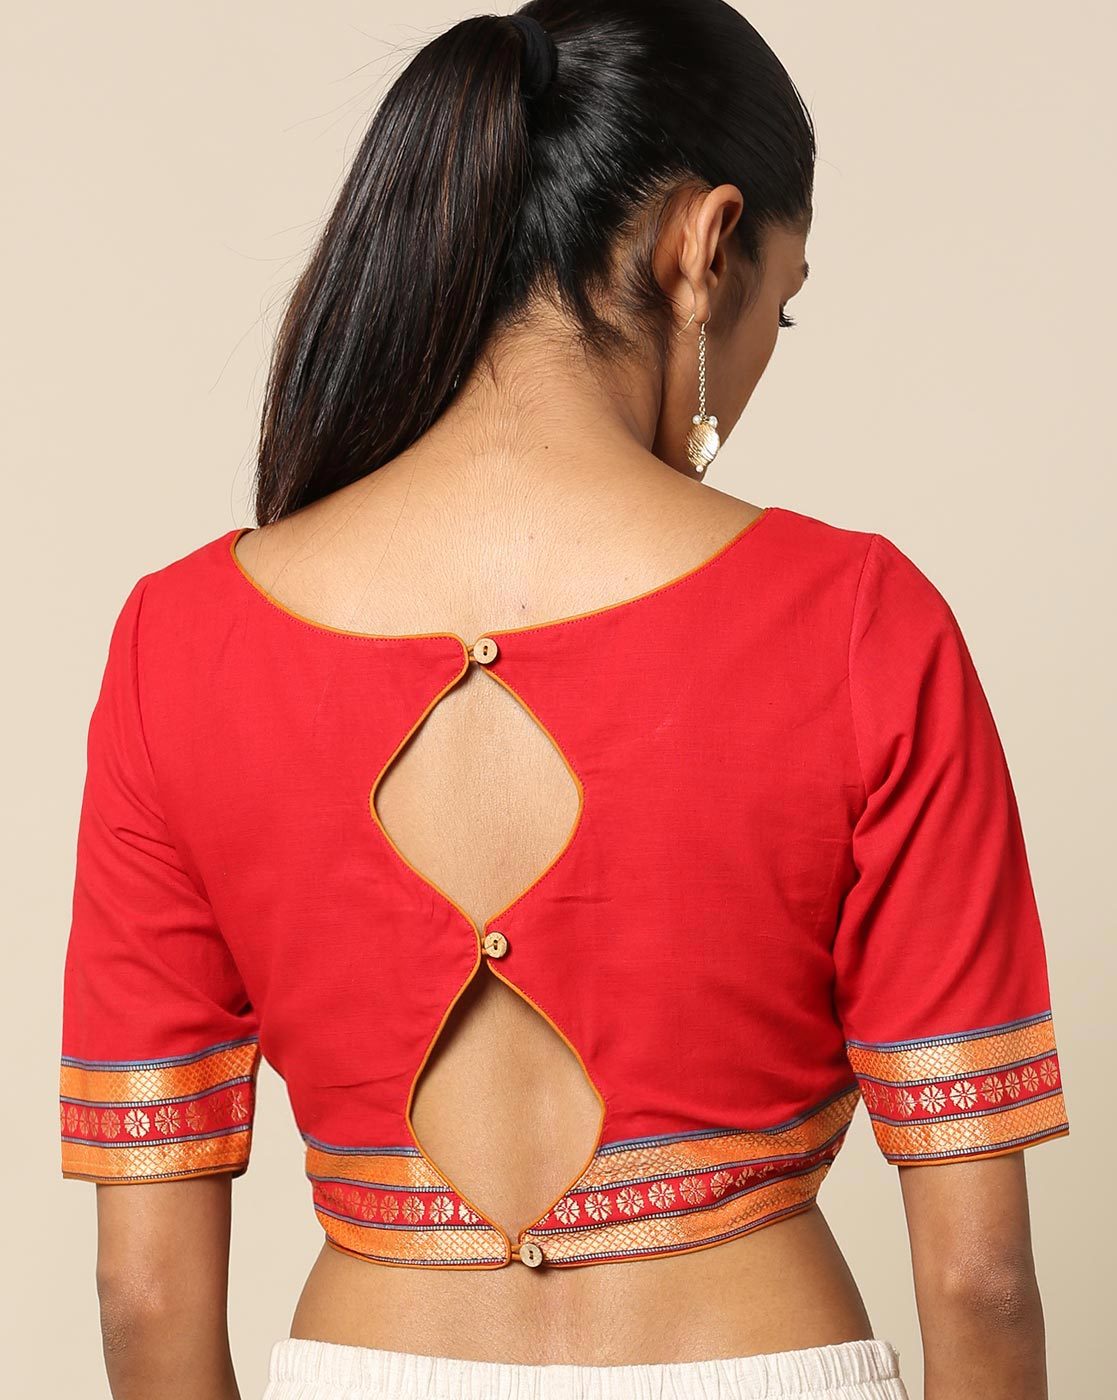 Simple back neck blouse design images – Blouse Back Neck Designs ...